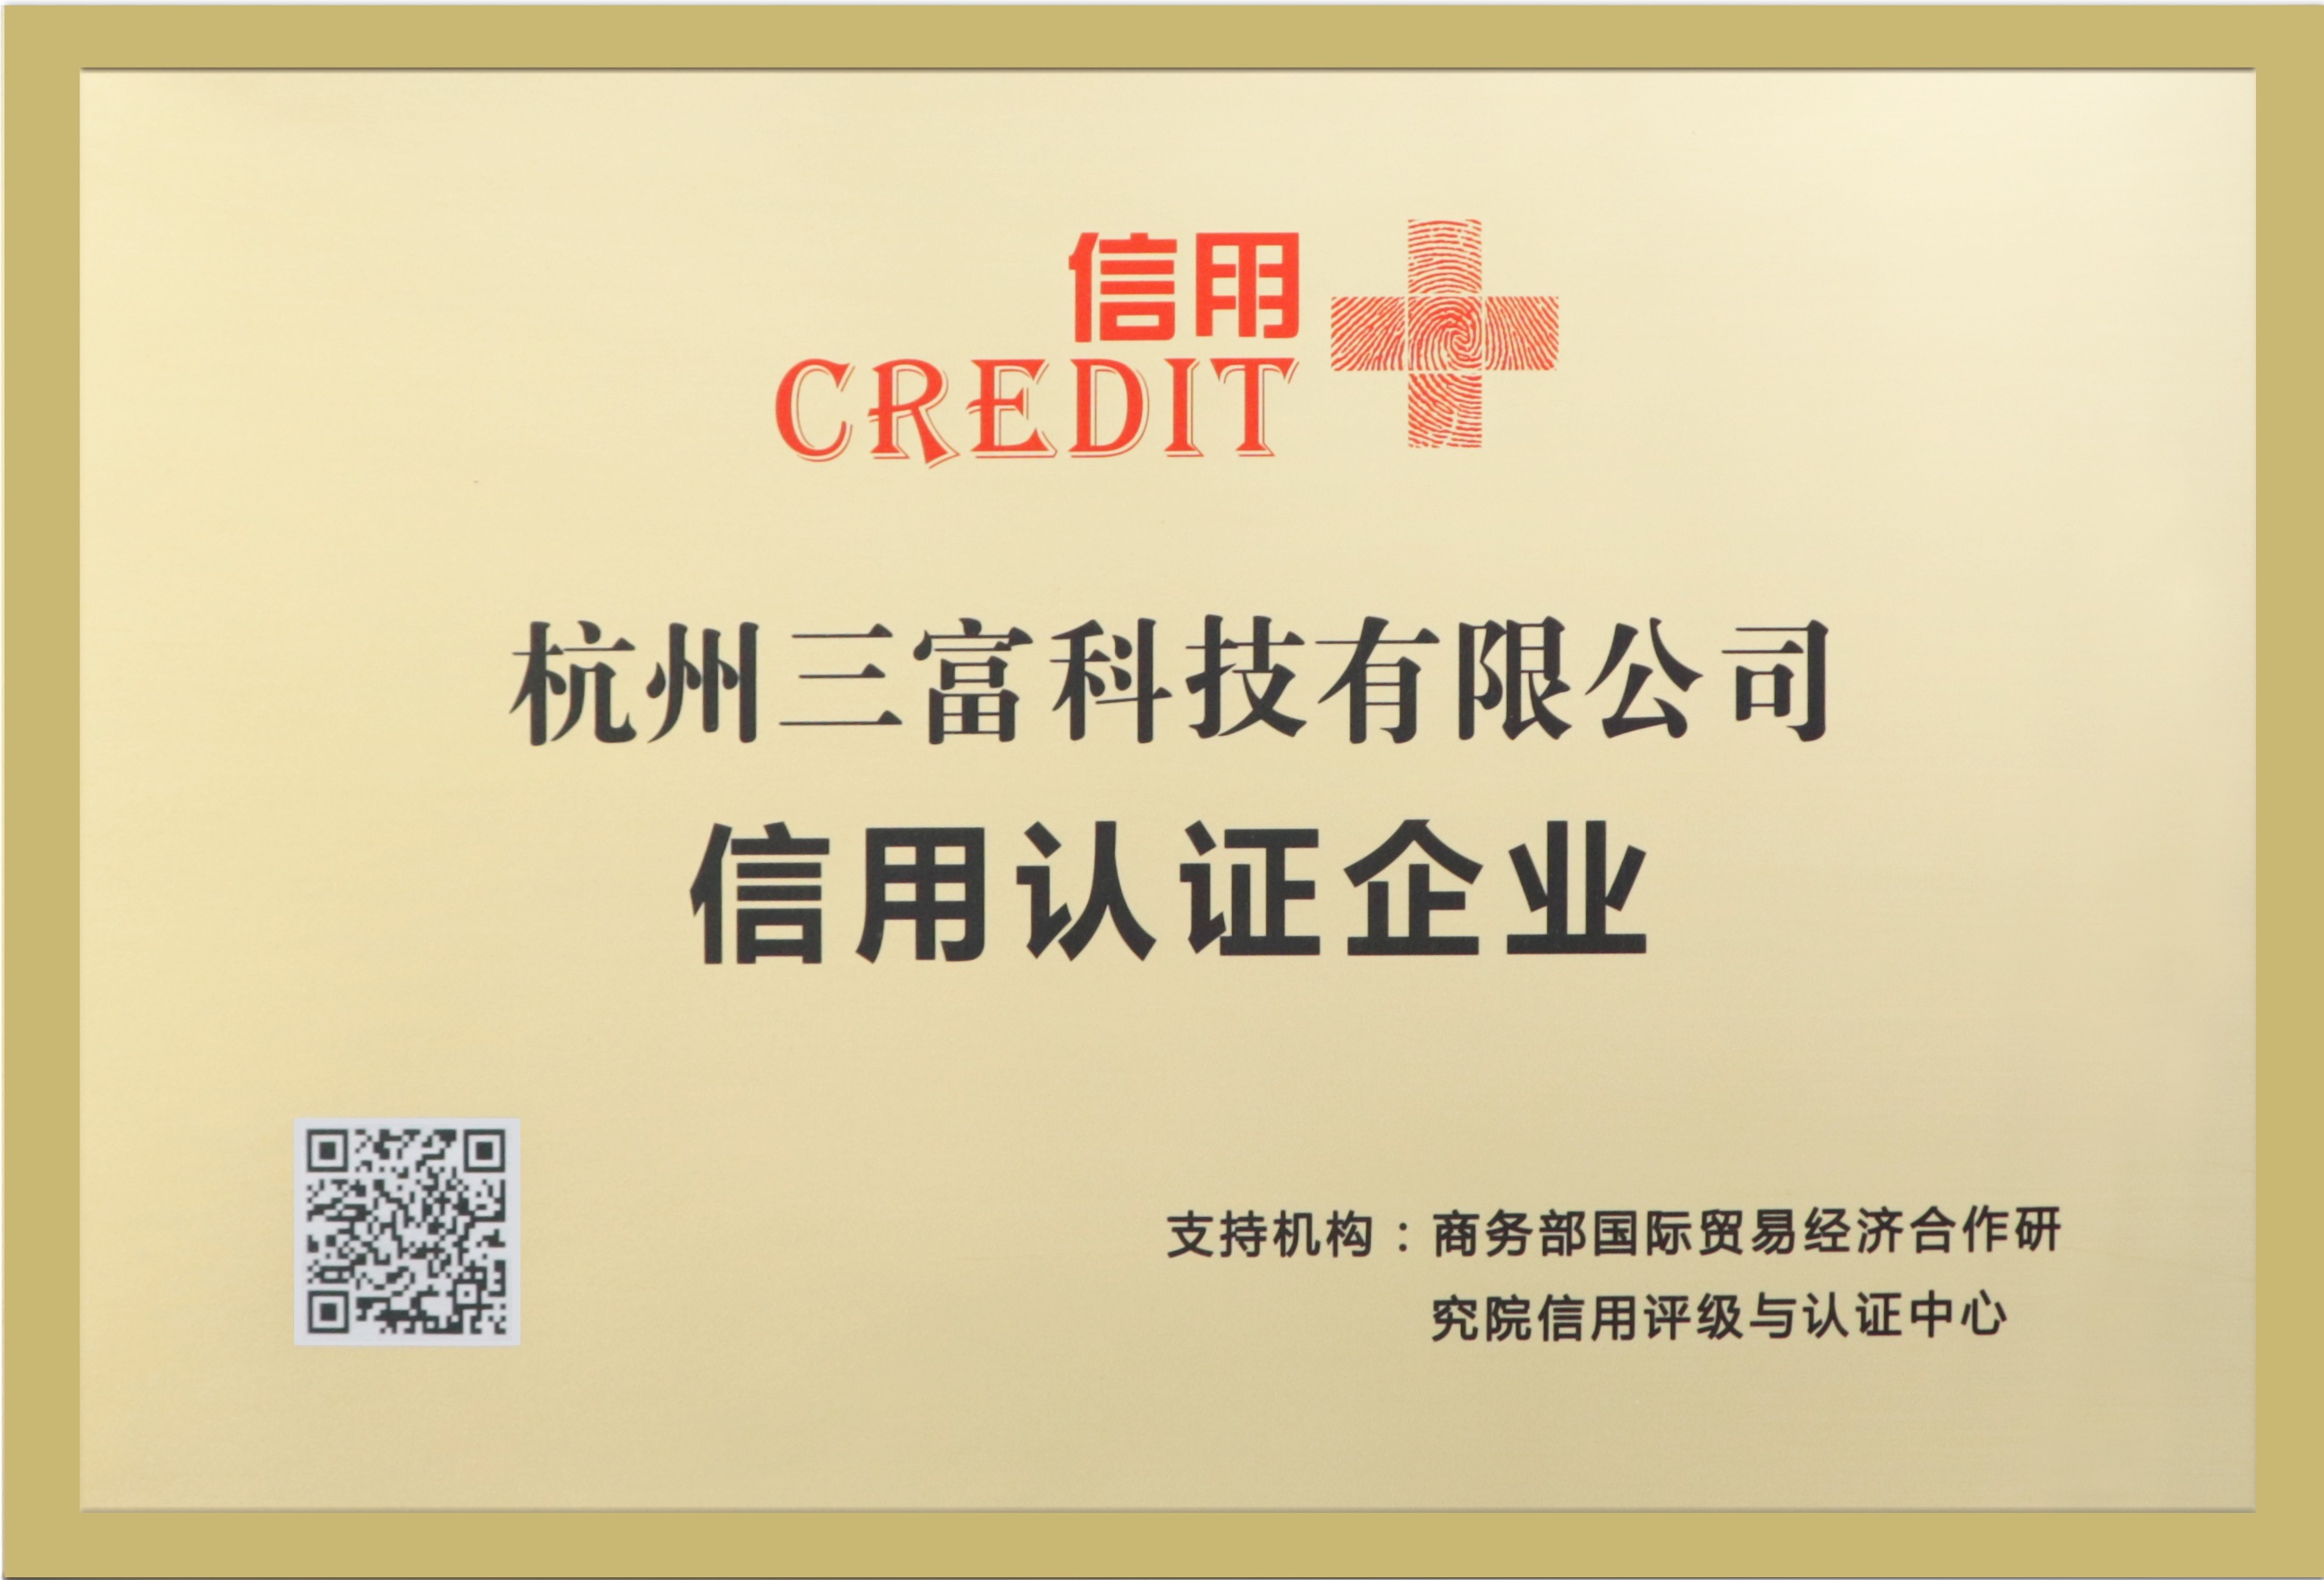 Credit certification enterprise